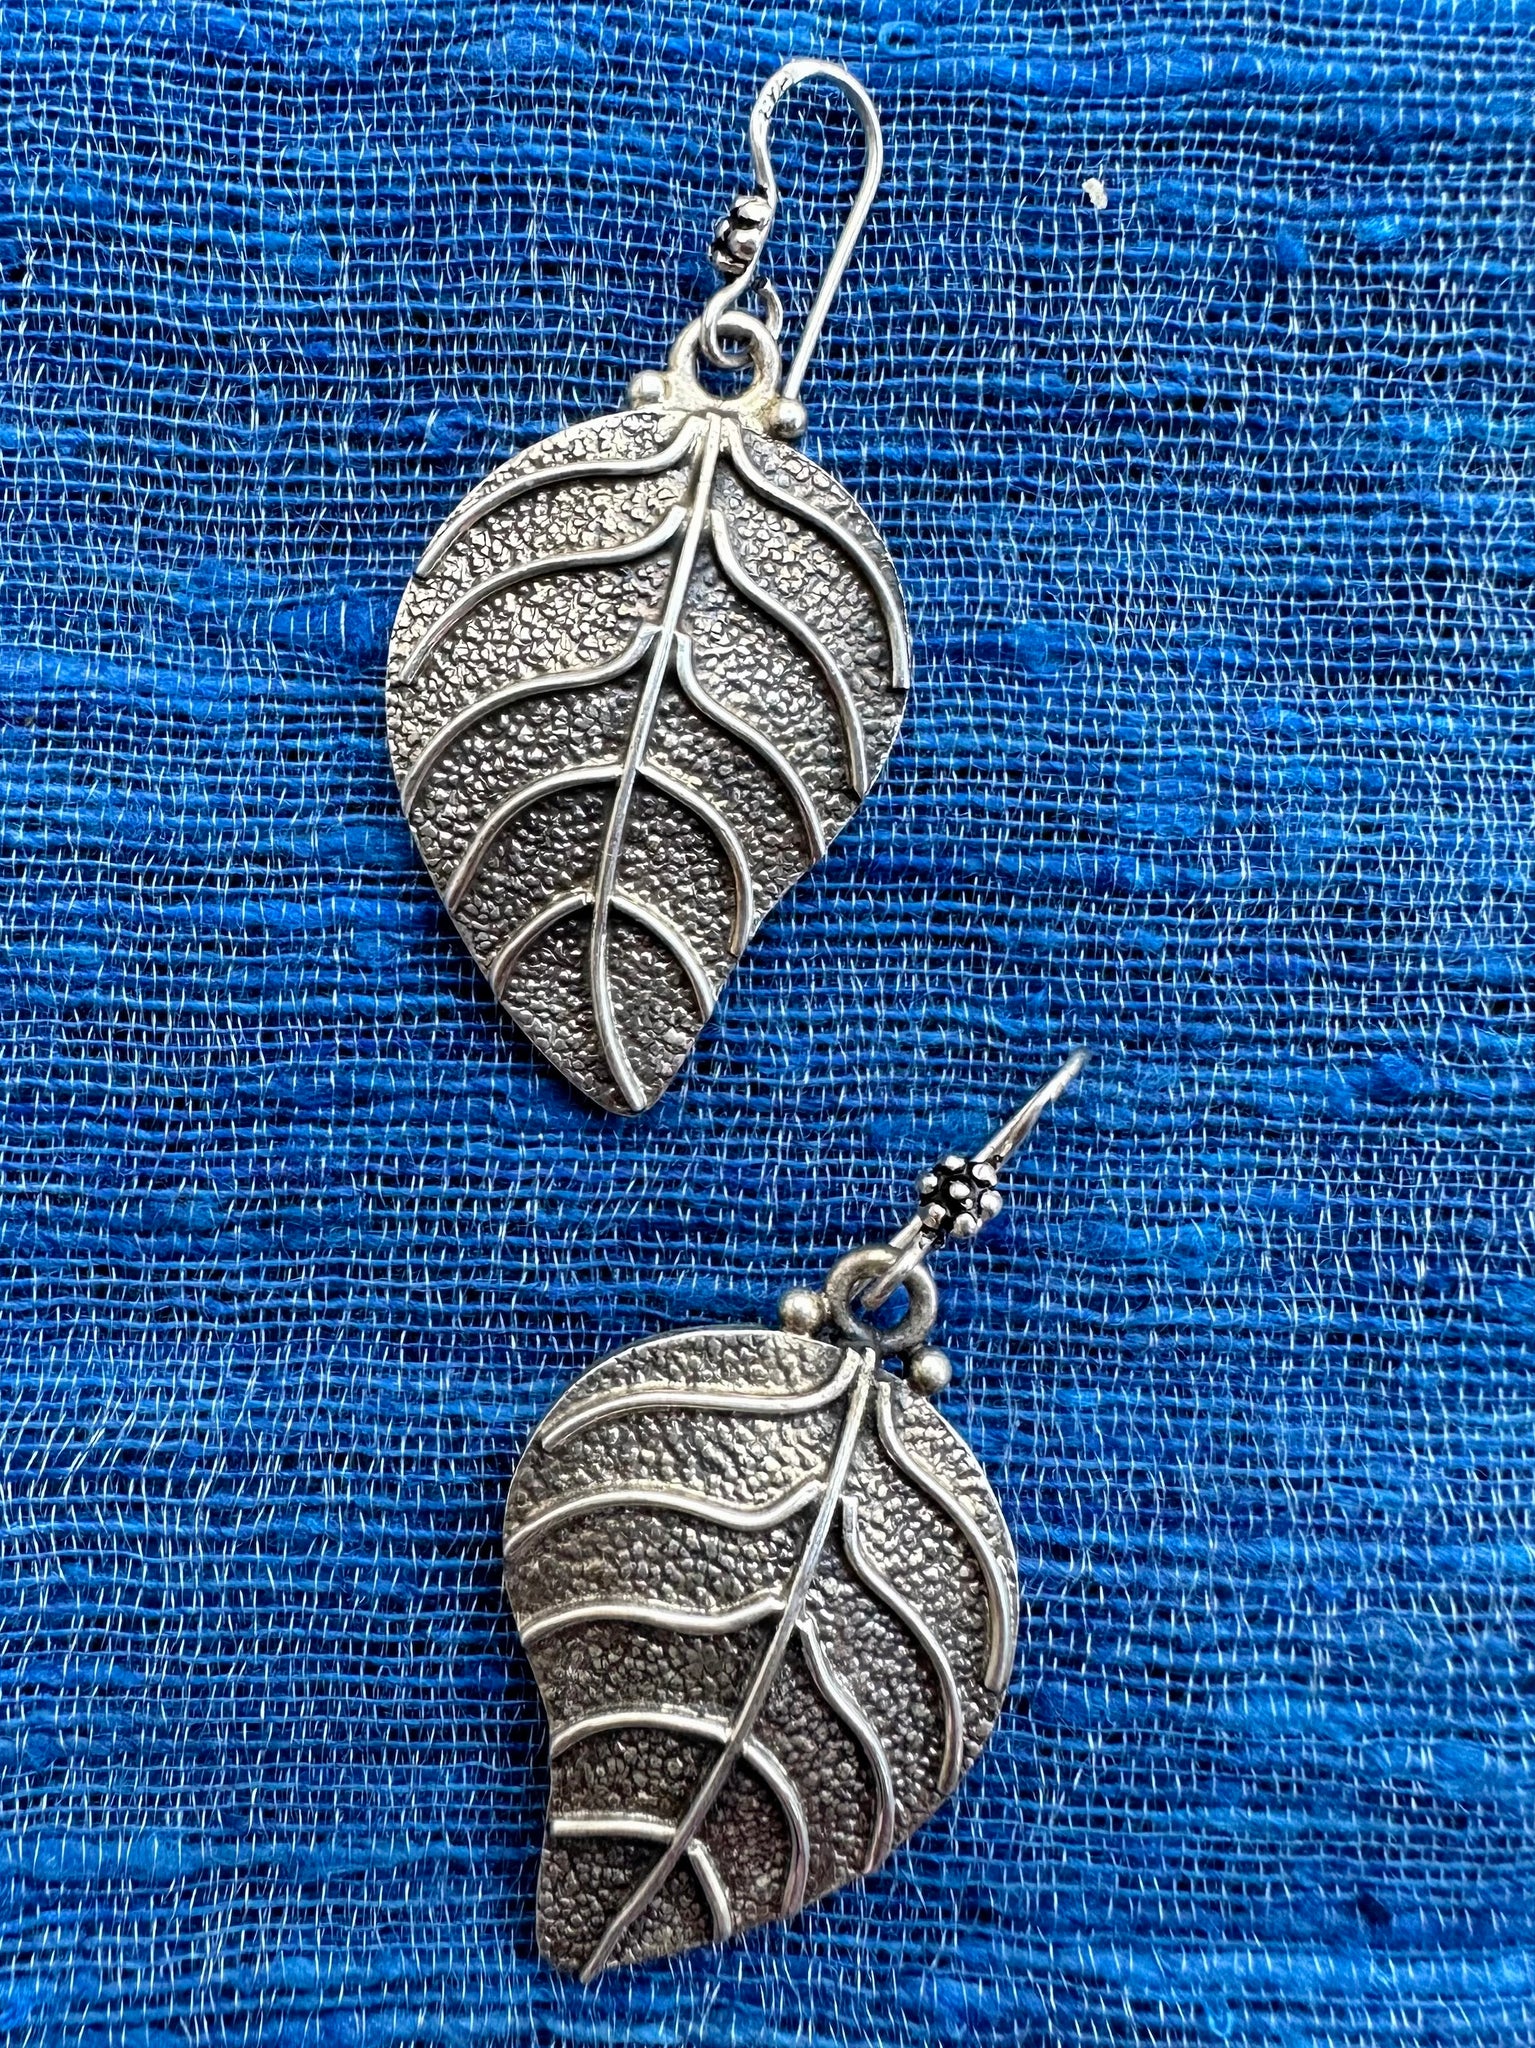 Etched finish leaf earring, oxidised silver leaf earring